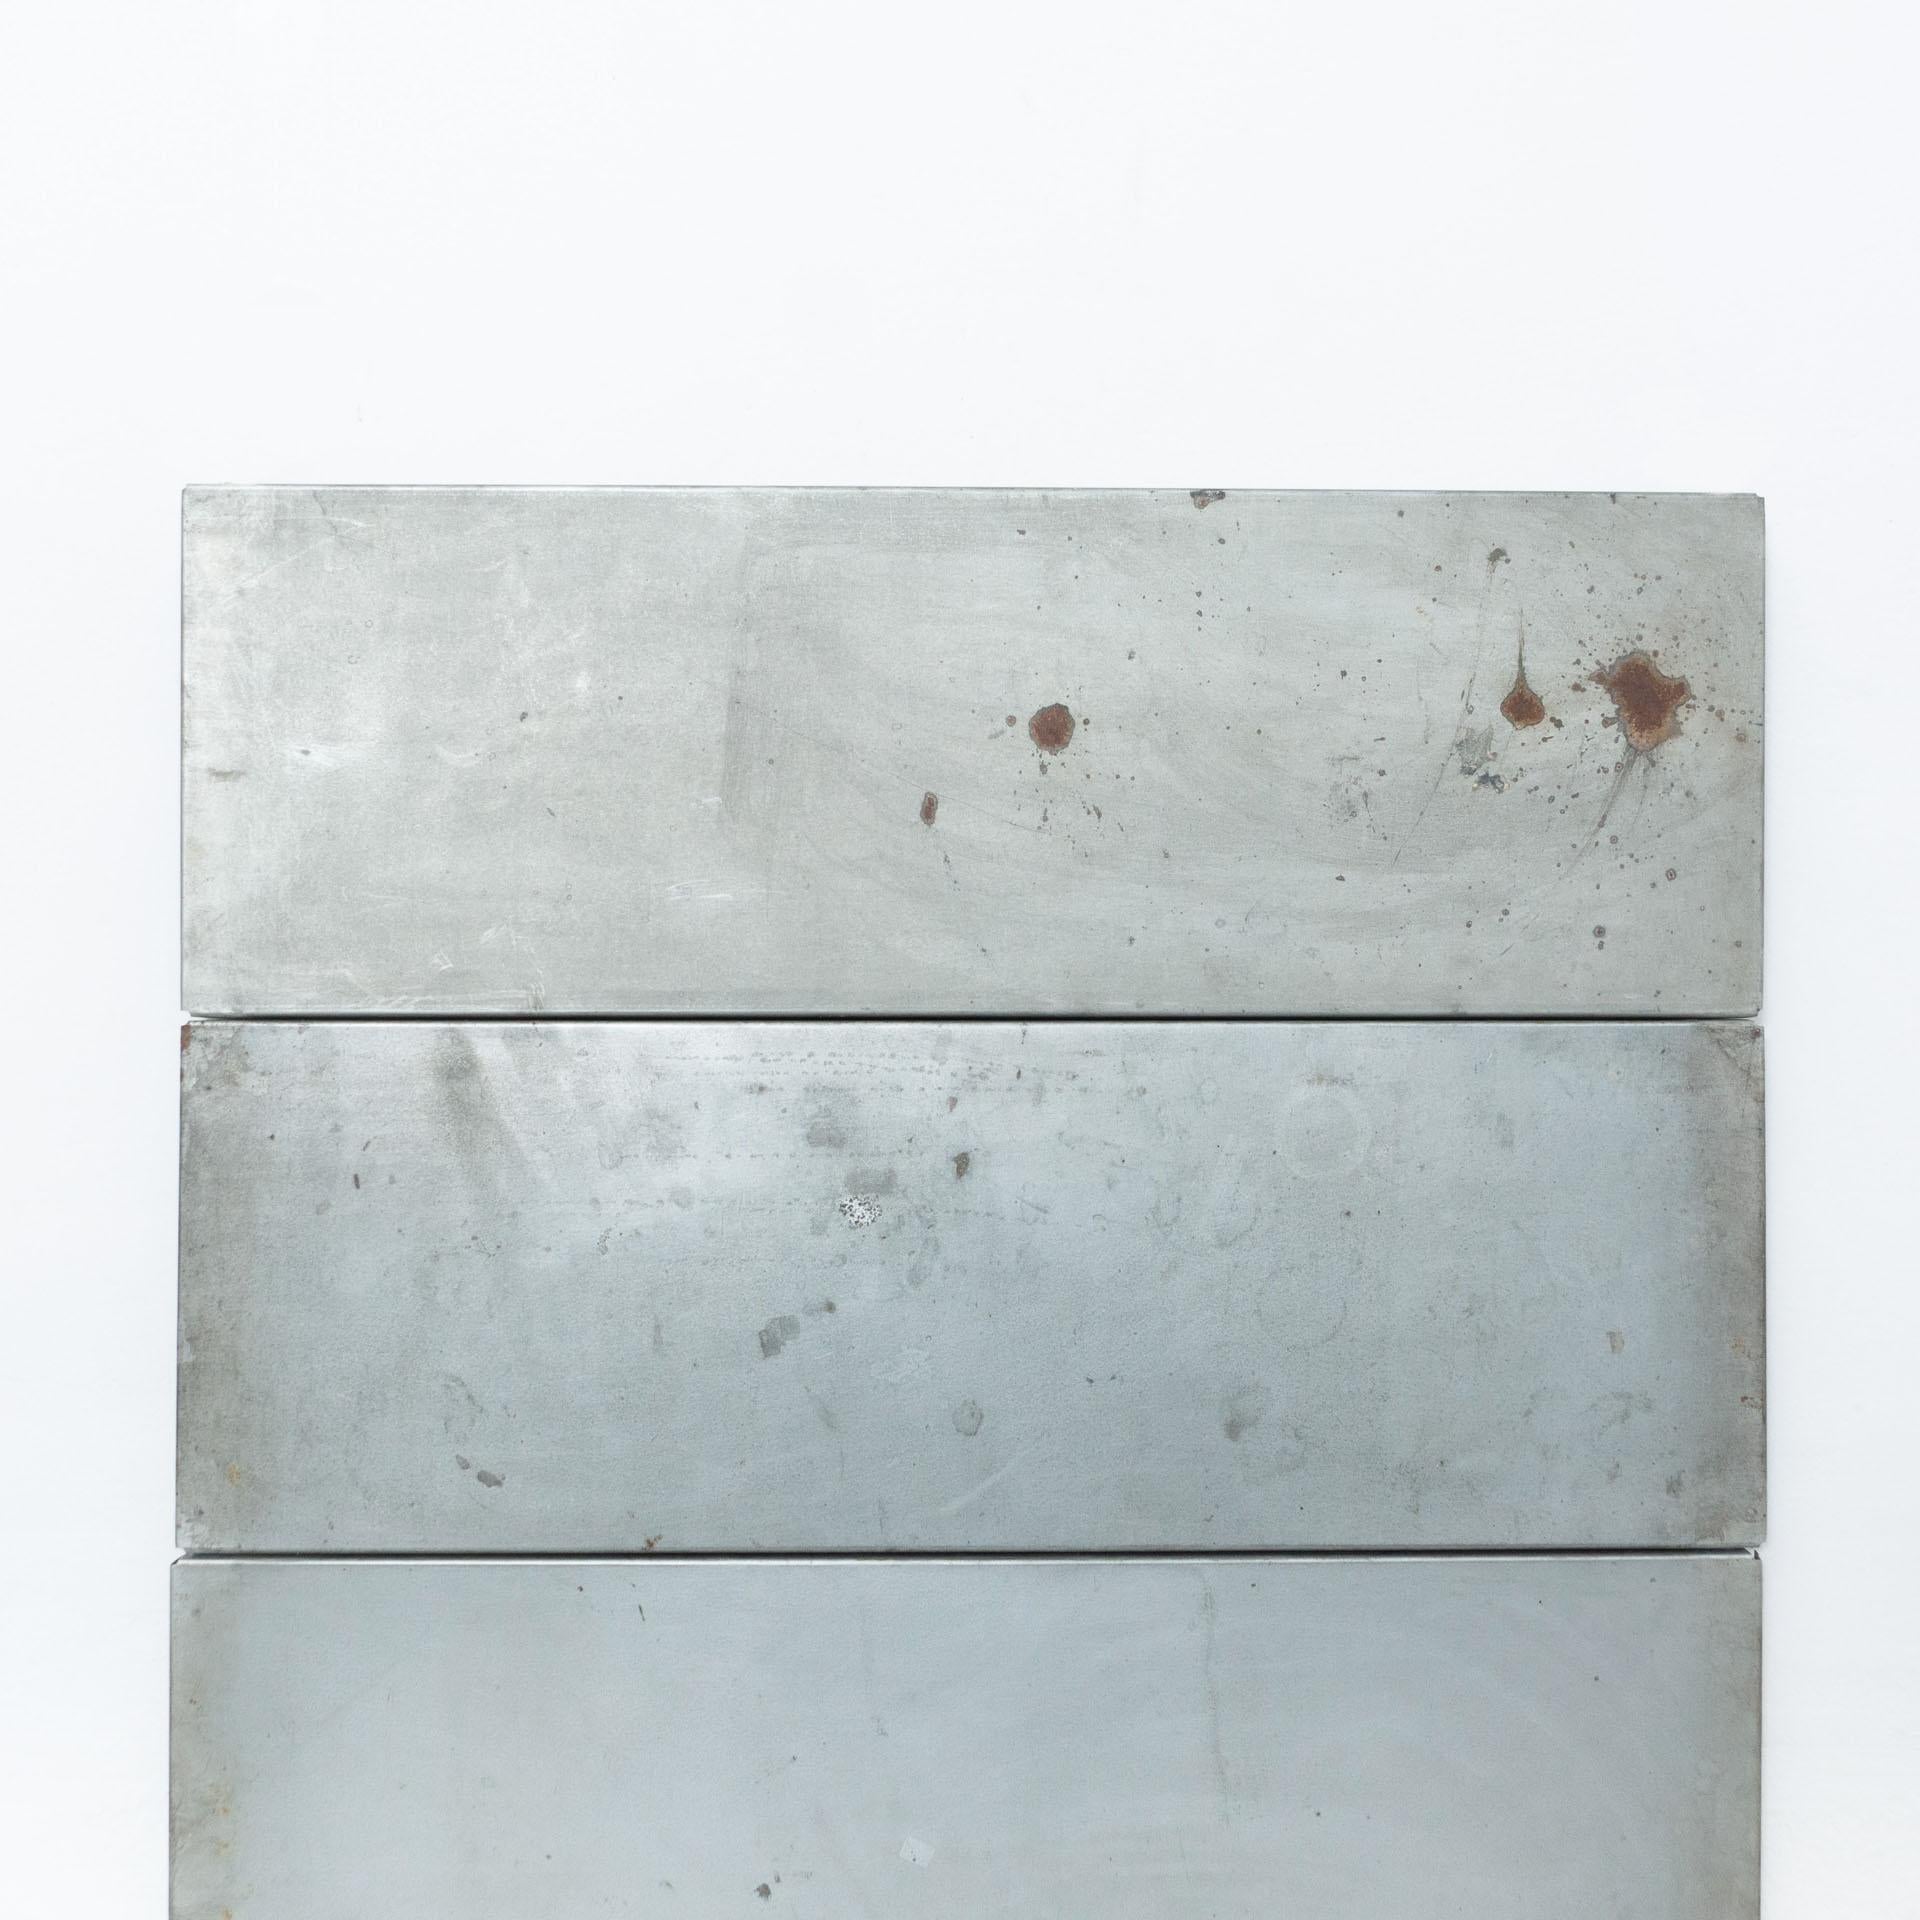 Galvanized Ramon Horts Minimalist Contemporary Artwork N4 For Sale